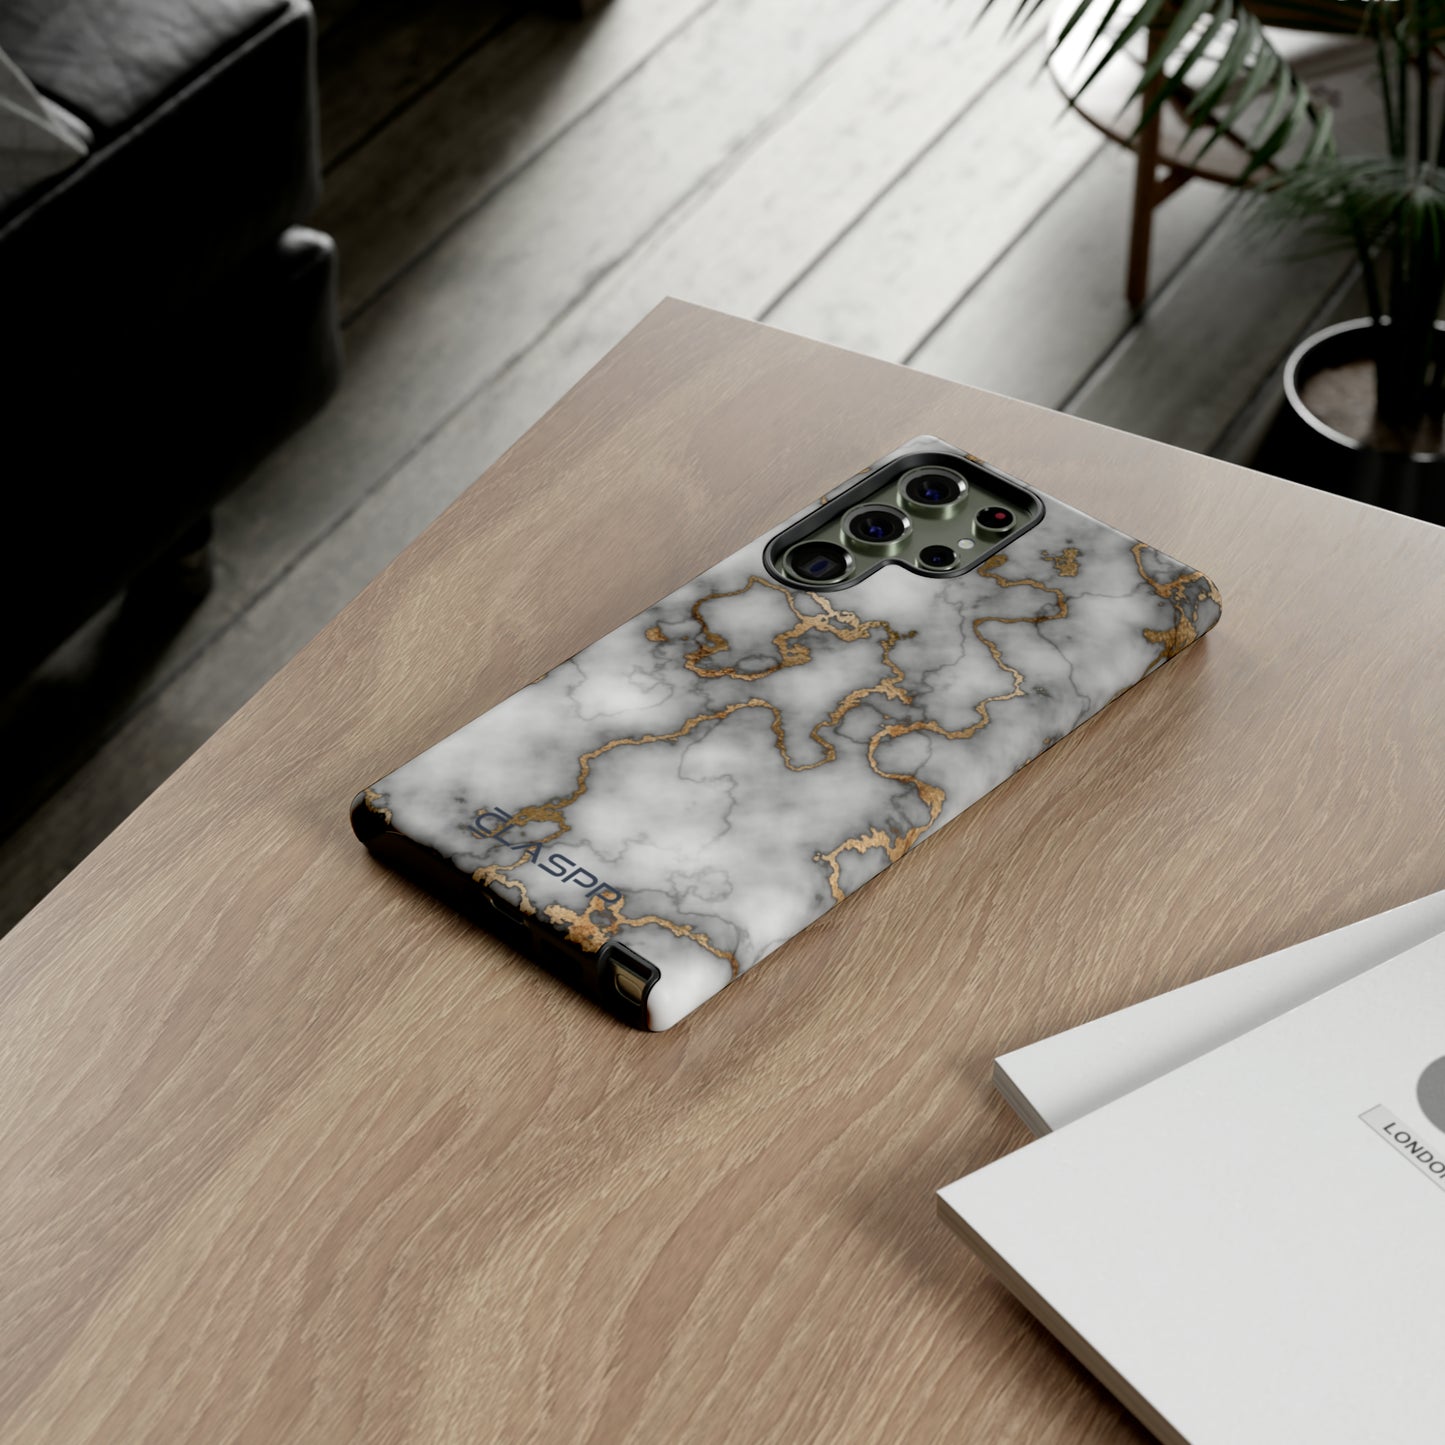 Carrara Golden Marble | Hardshell Dual Layer Phone Case